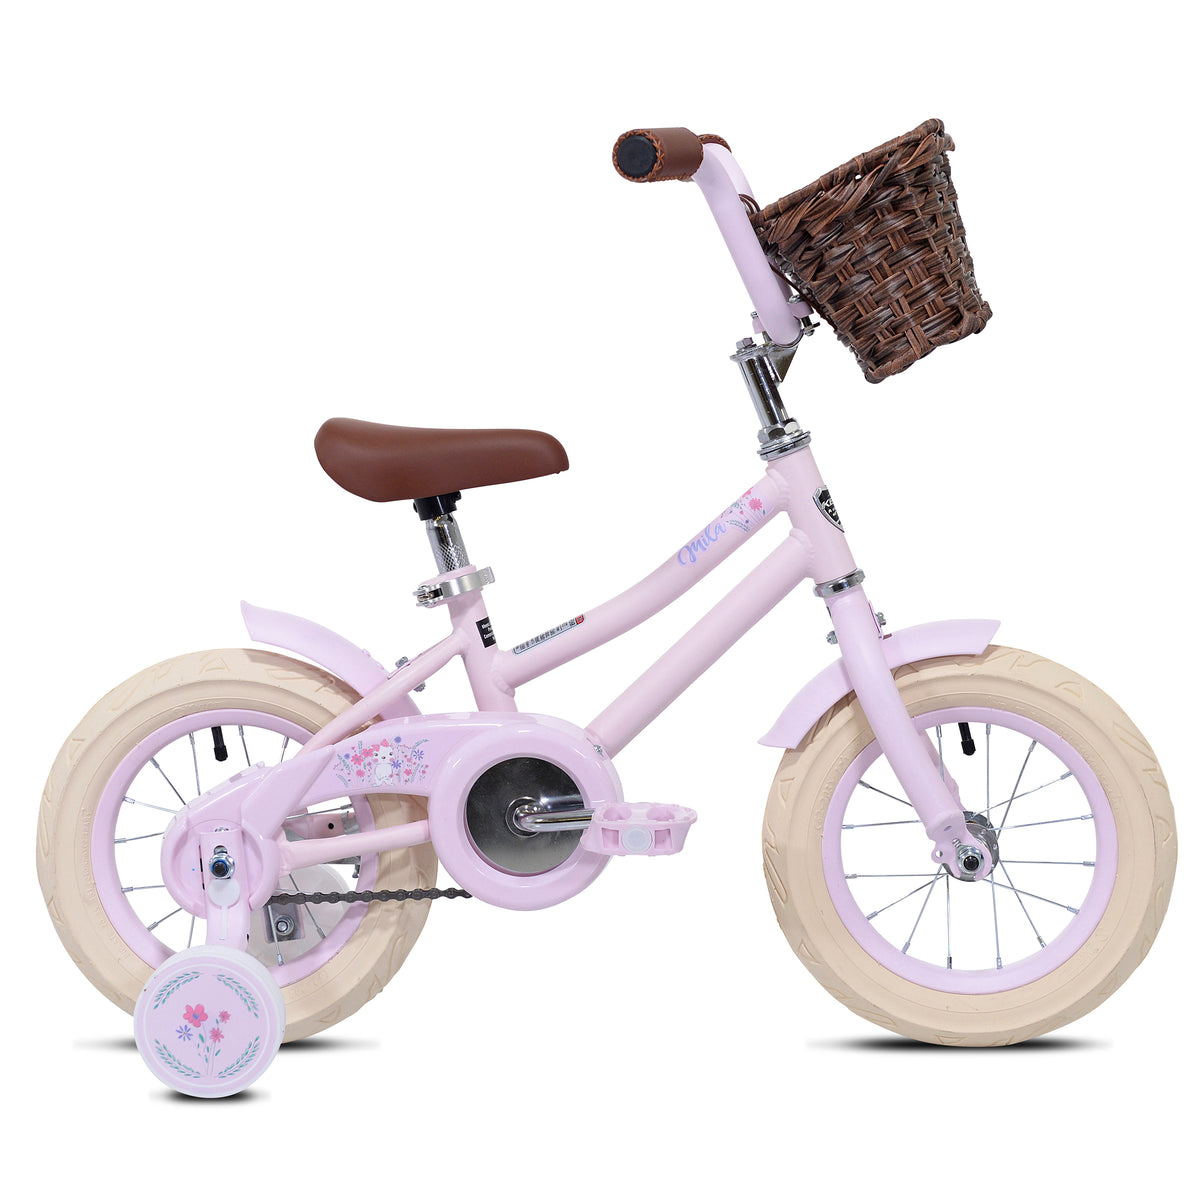 12" Kent Mila | Cruiser Bike for Kids Ages 2-4